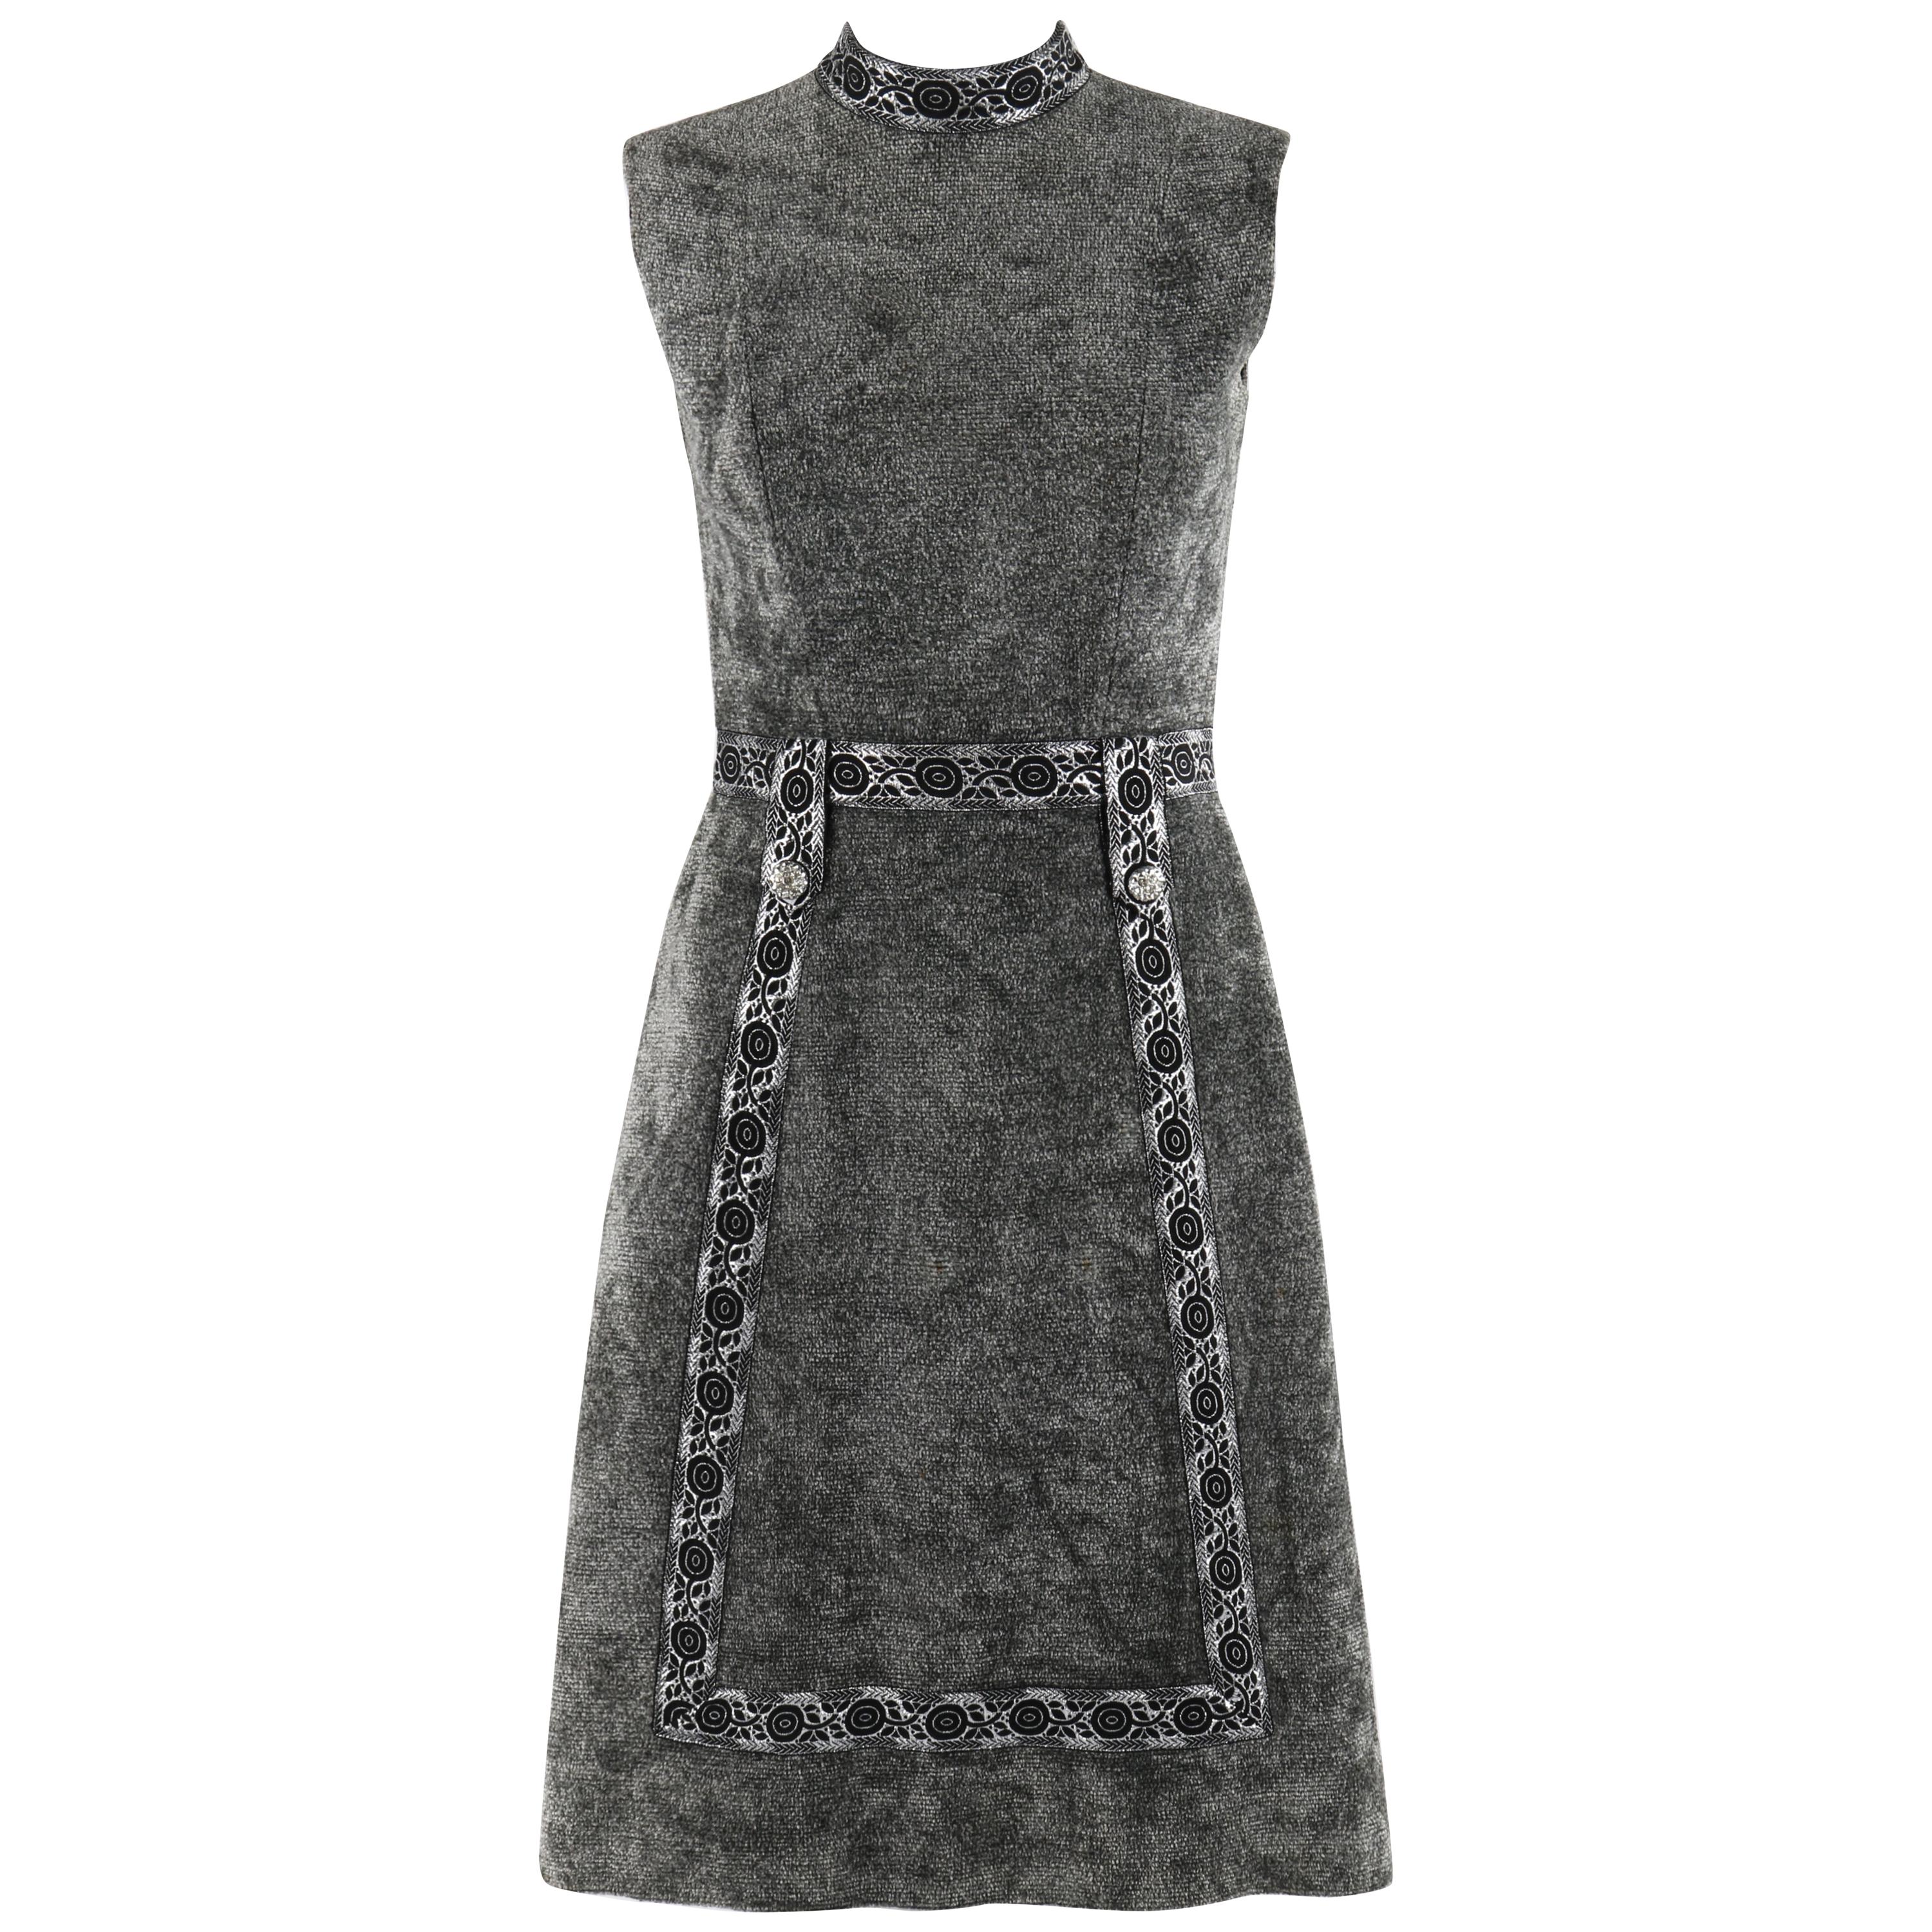 LESLIE FAY Original c.1960’s Gray Silver Mock Neck Sleeveless Mod A-line Dress For Sale